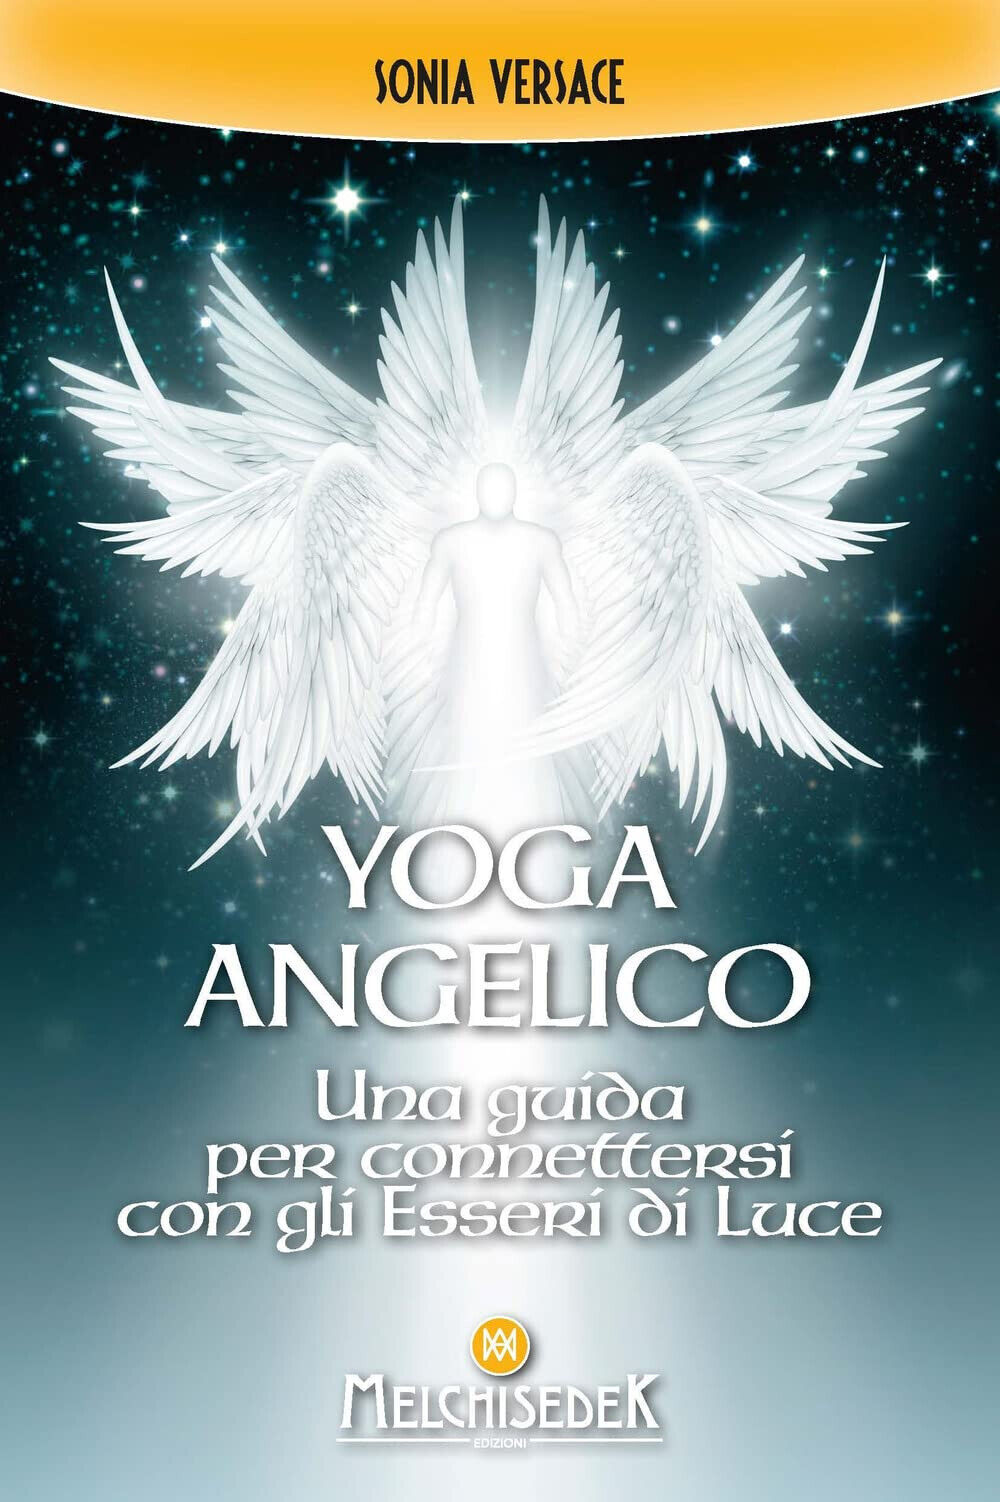 Yoga angelico - Sonia Versace - Melchisedek, 2022